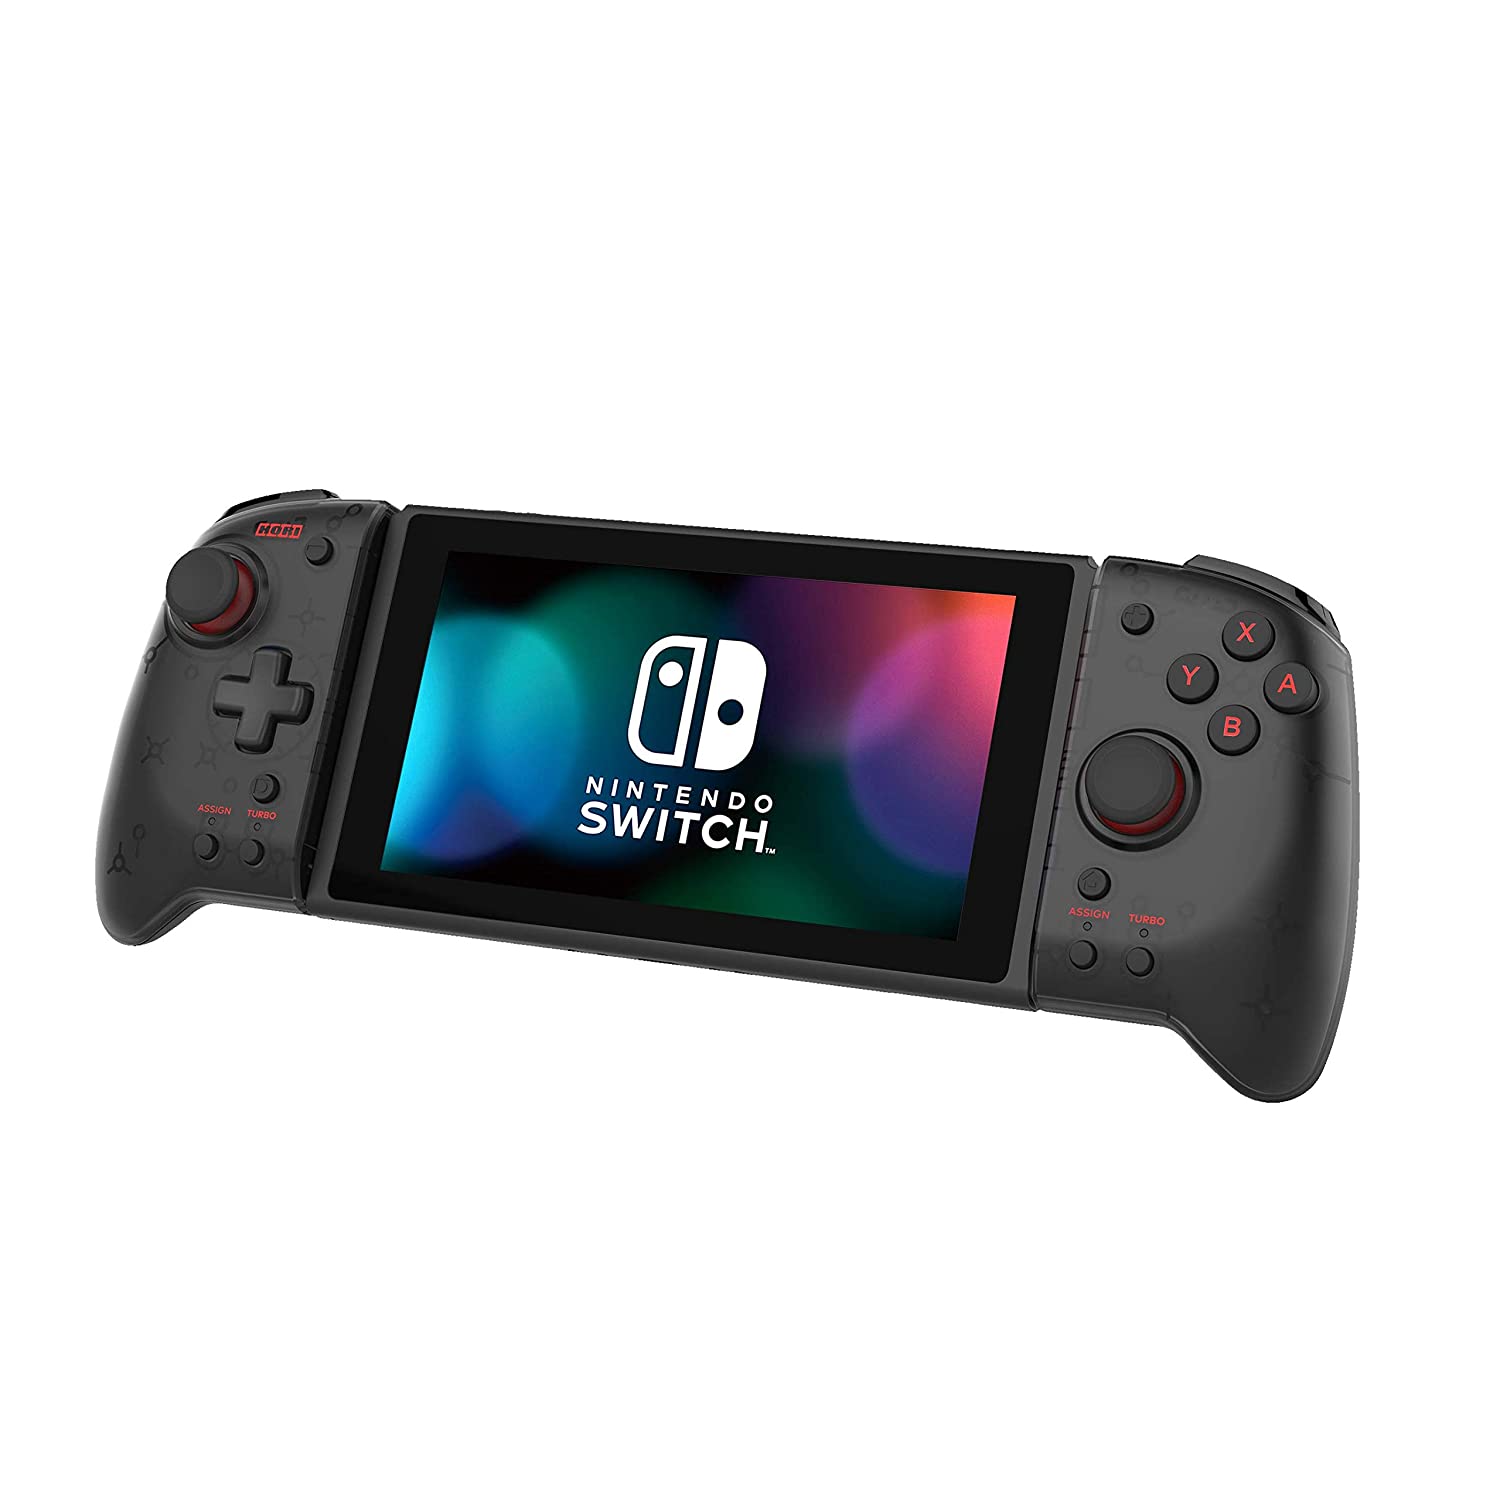 Hori Split Pad Pro controller for Nintendo Switch.